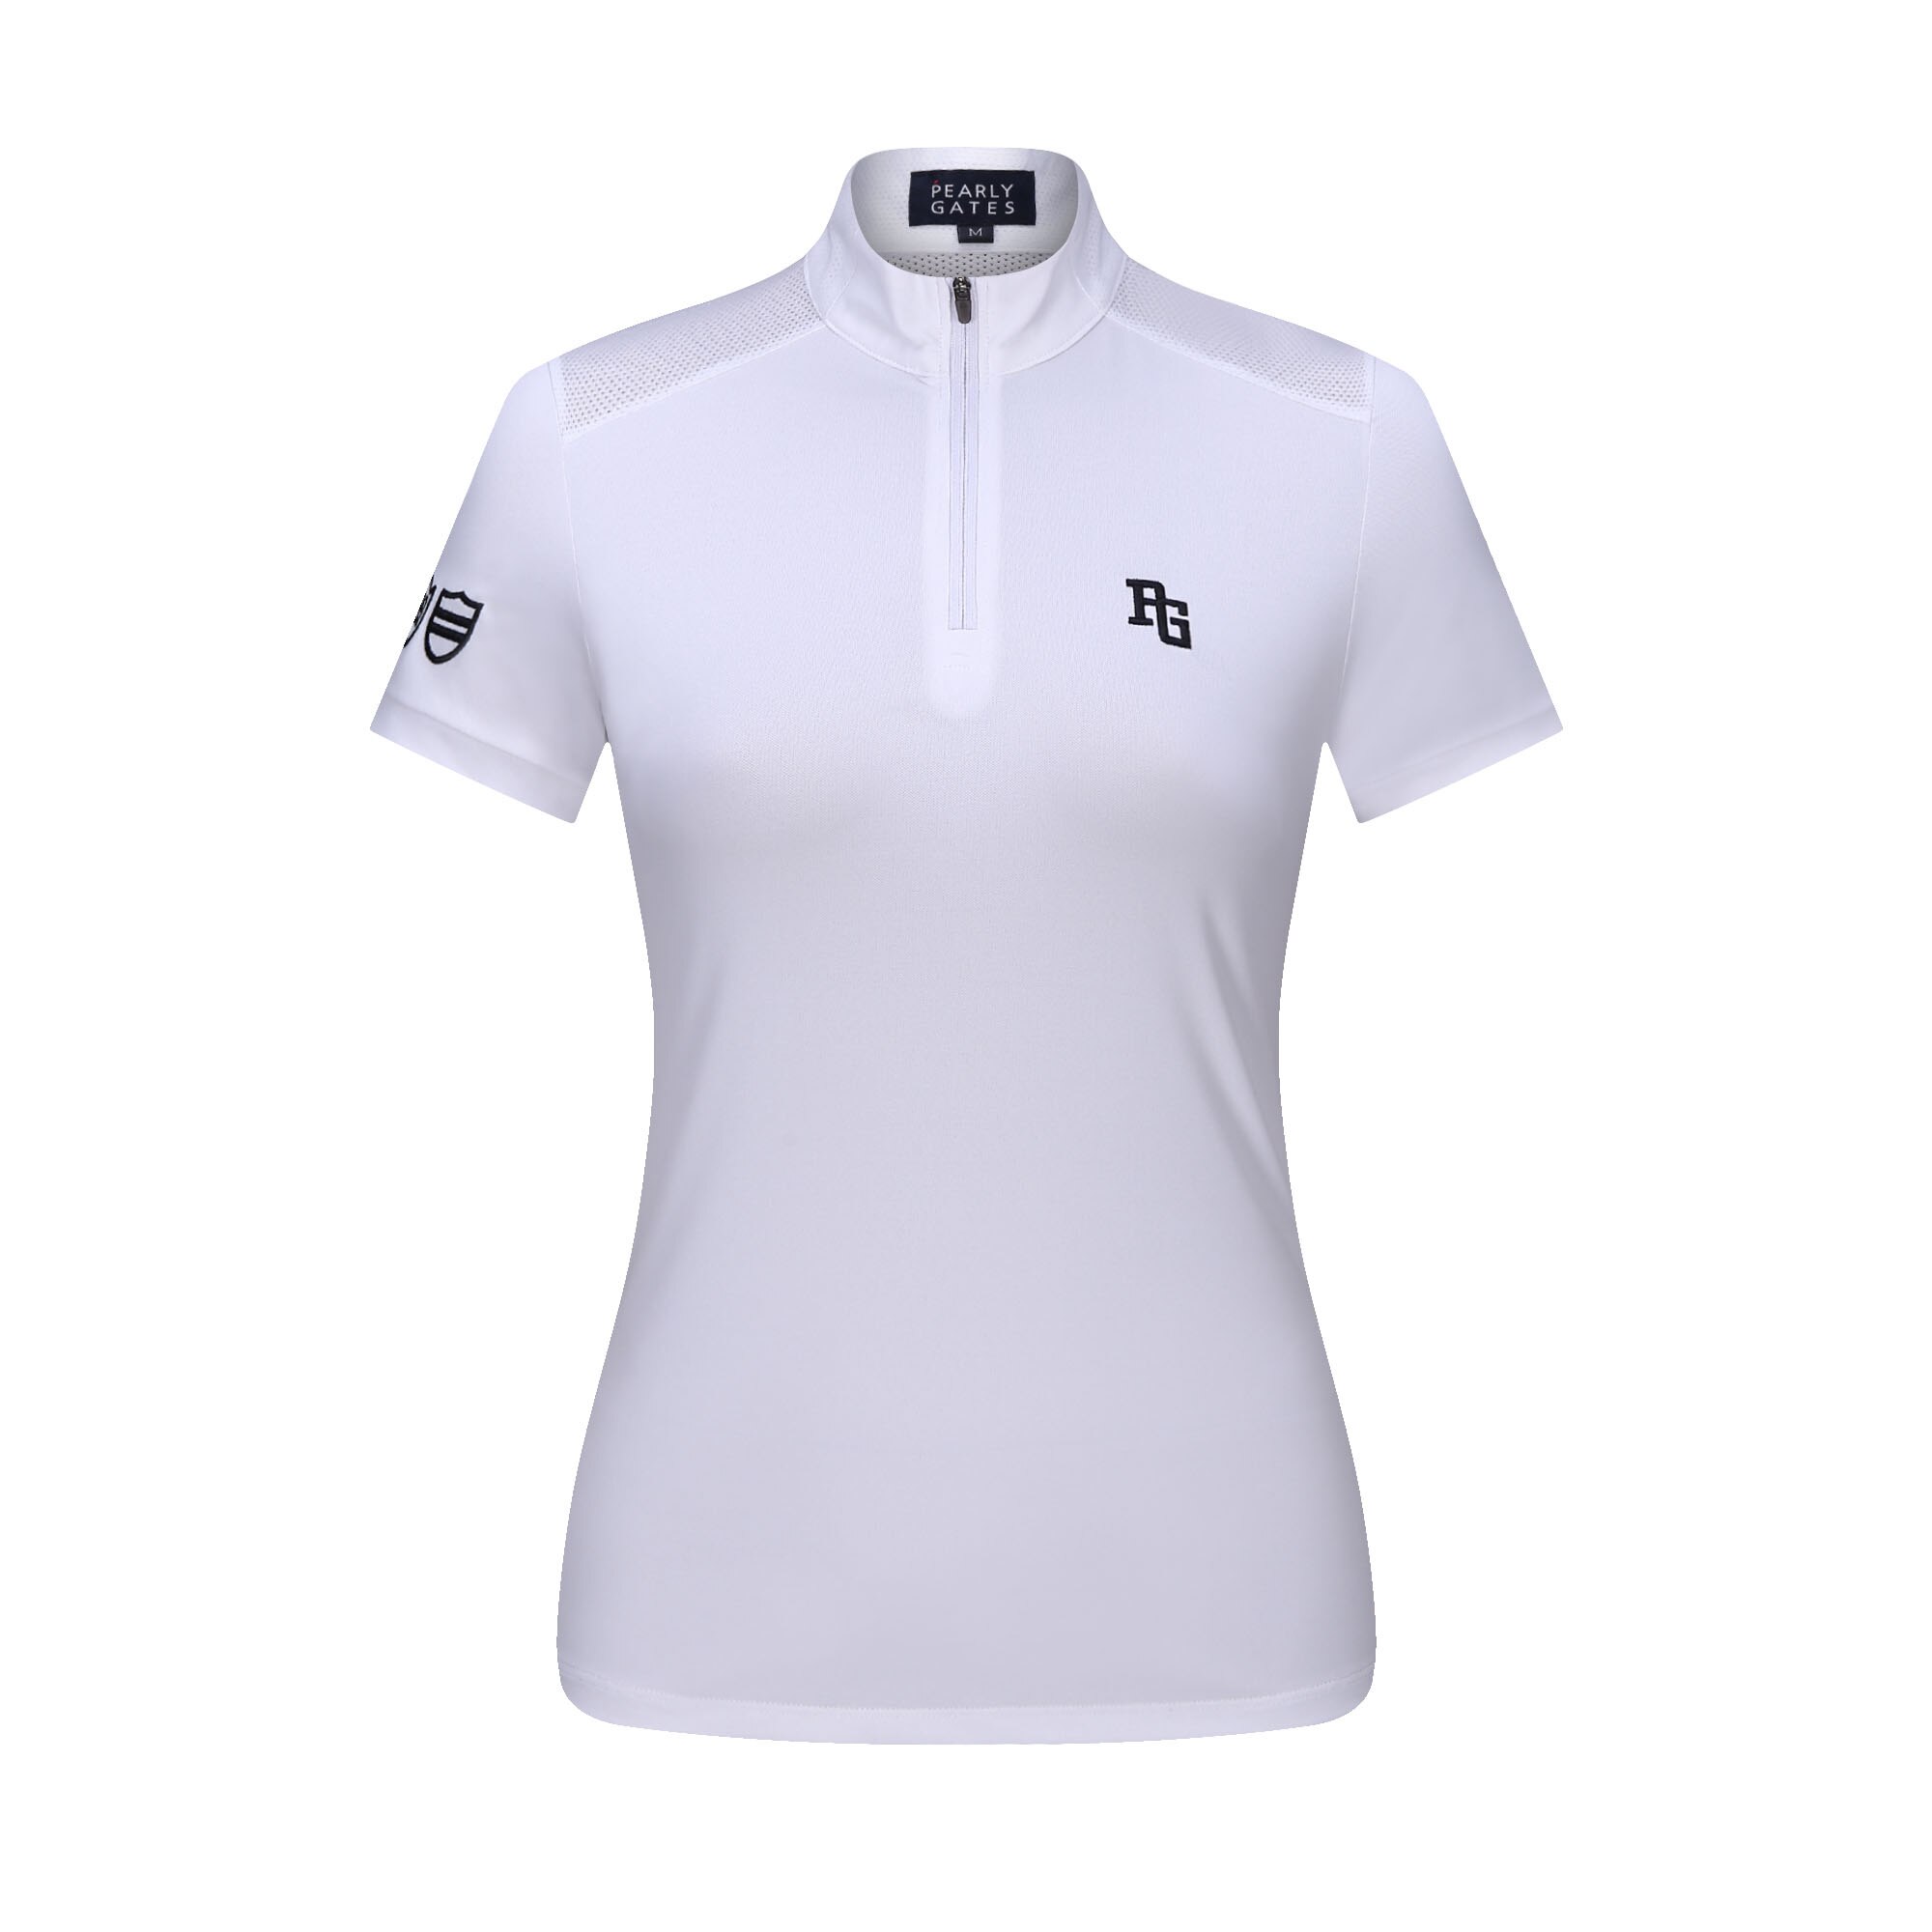 2020 Ladies Pearly Gates Golf Leisure Breathing Fashion Short Mouw T-shirt Free shipping